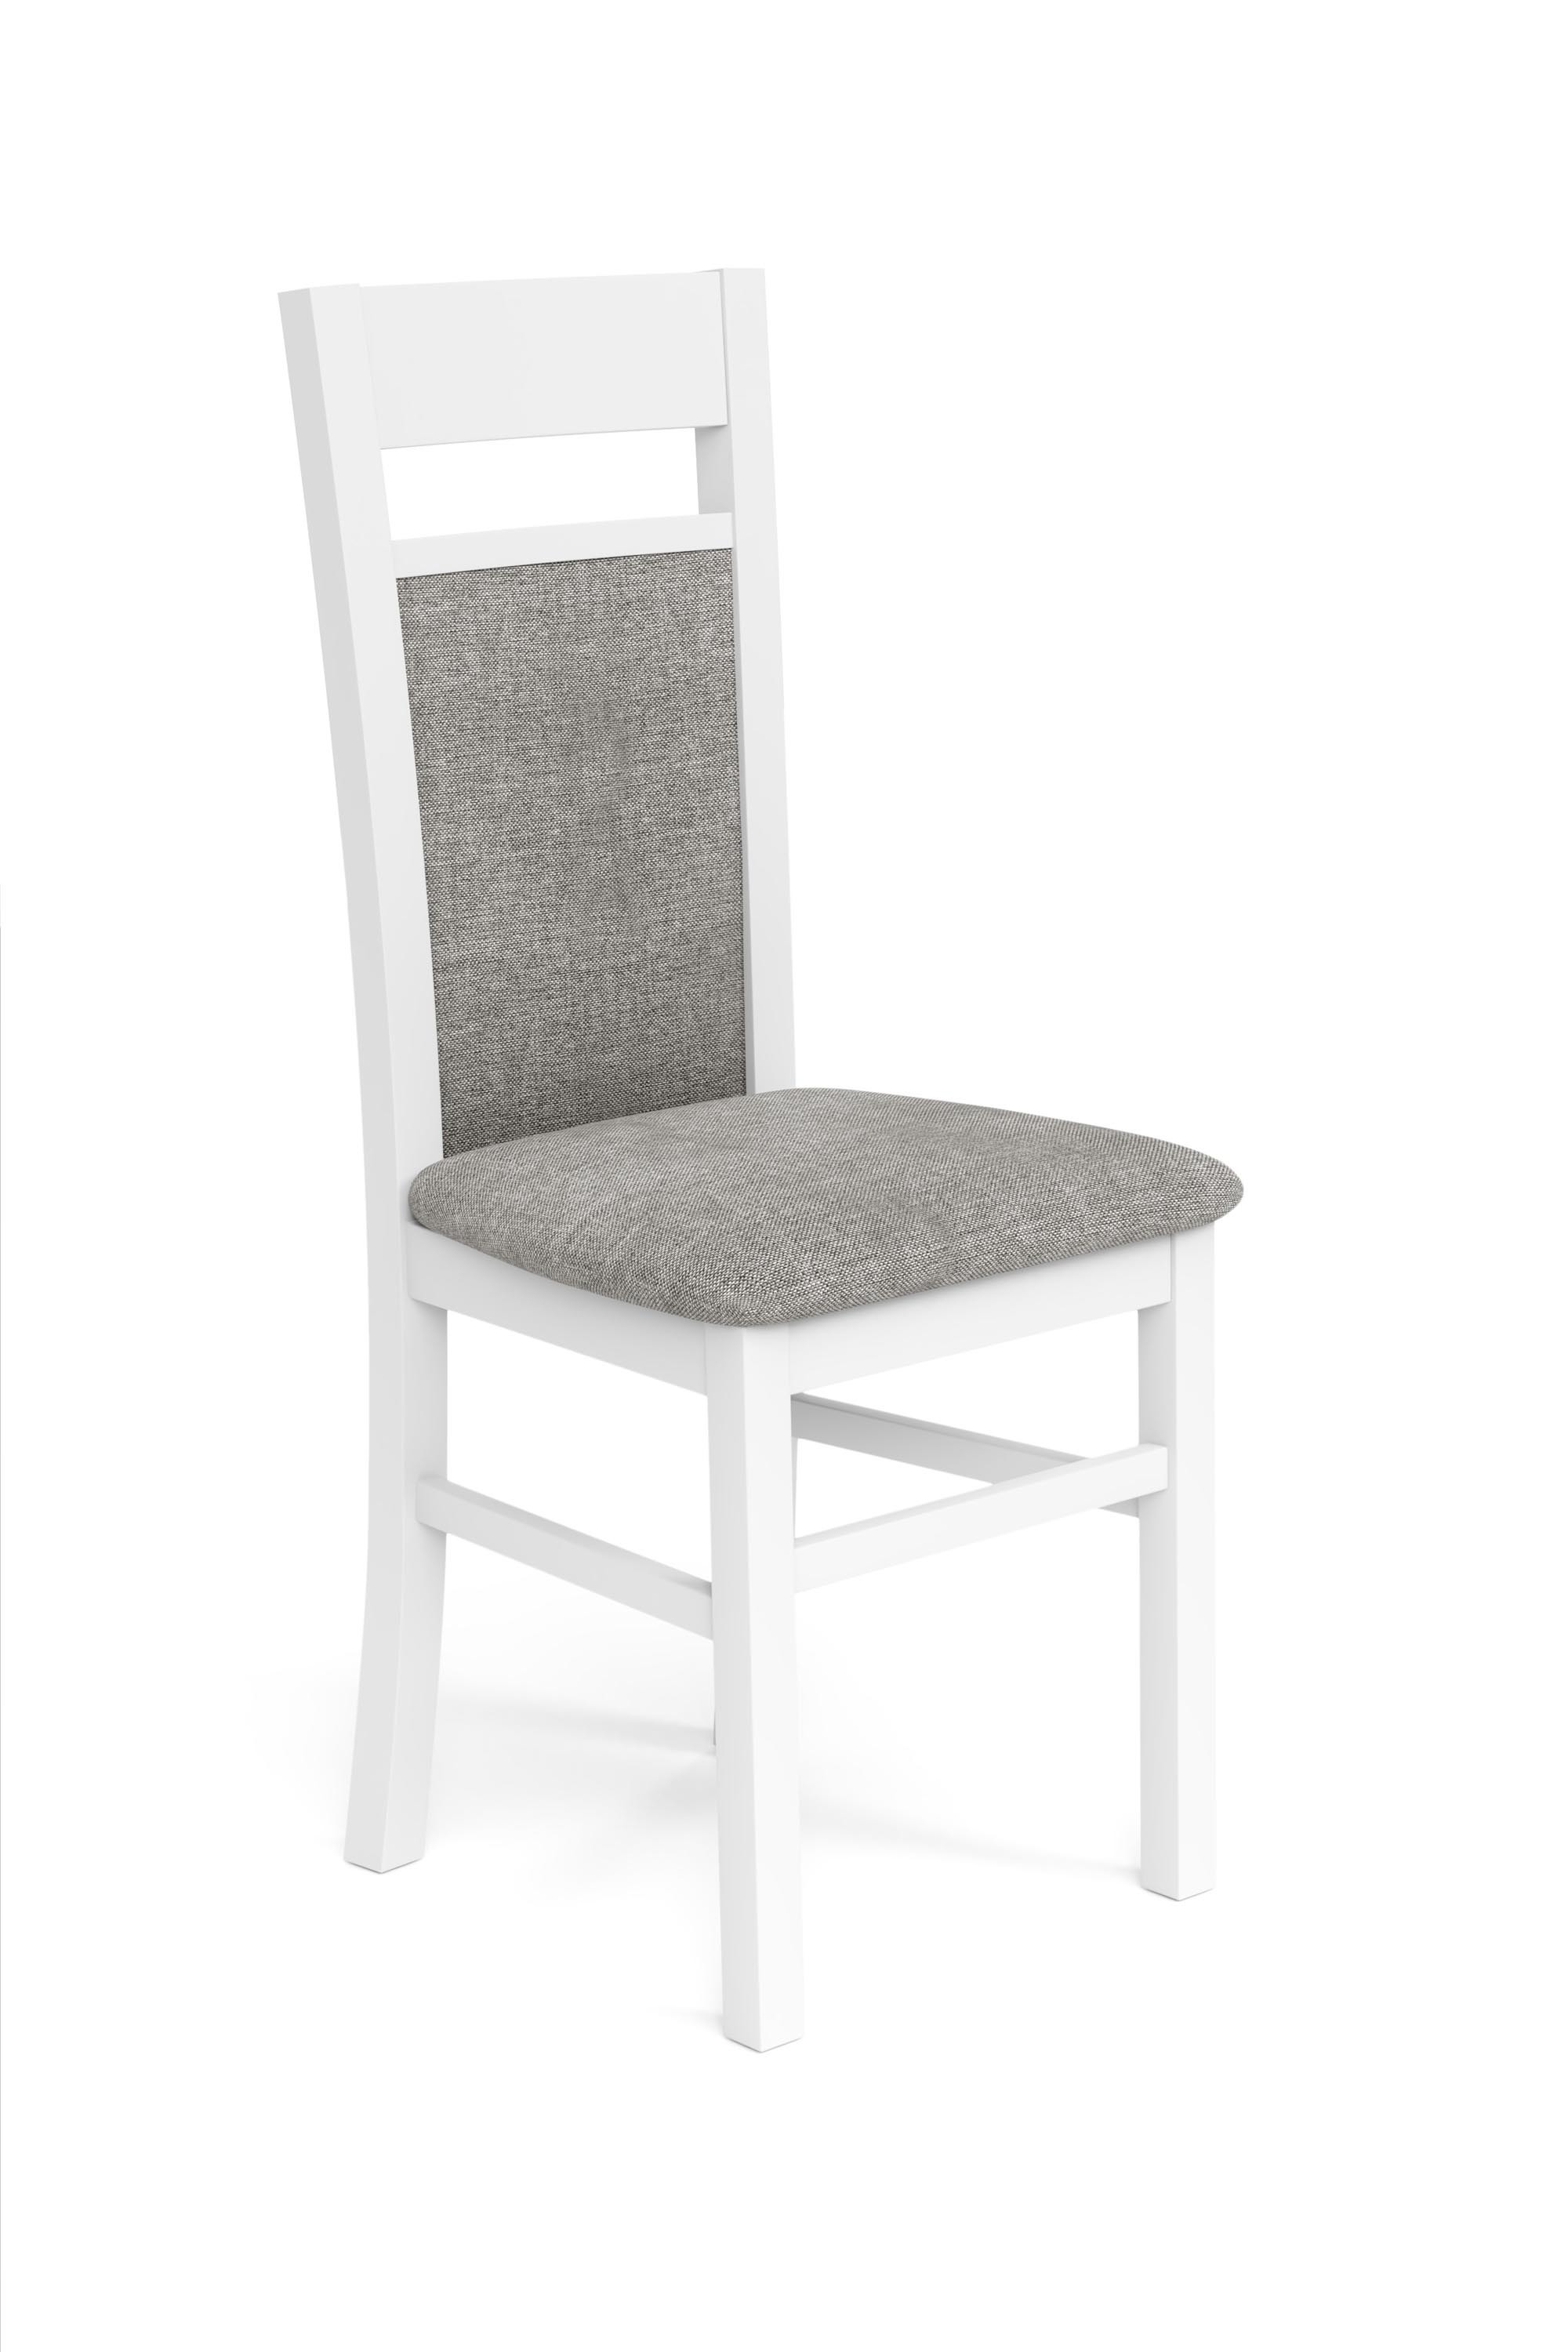 GERARD2 krzesło biały / tap: Inari 91 (1p=2szt)